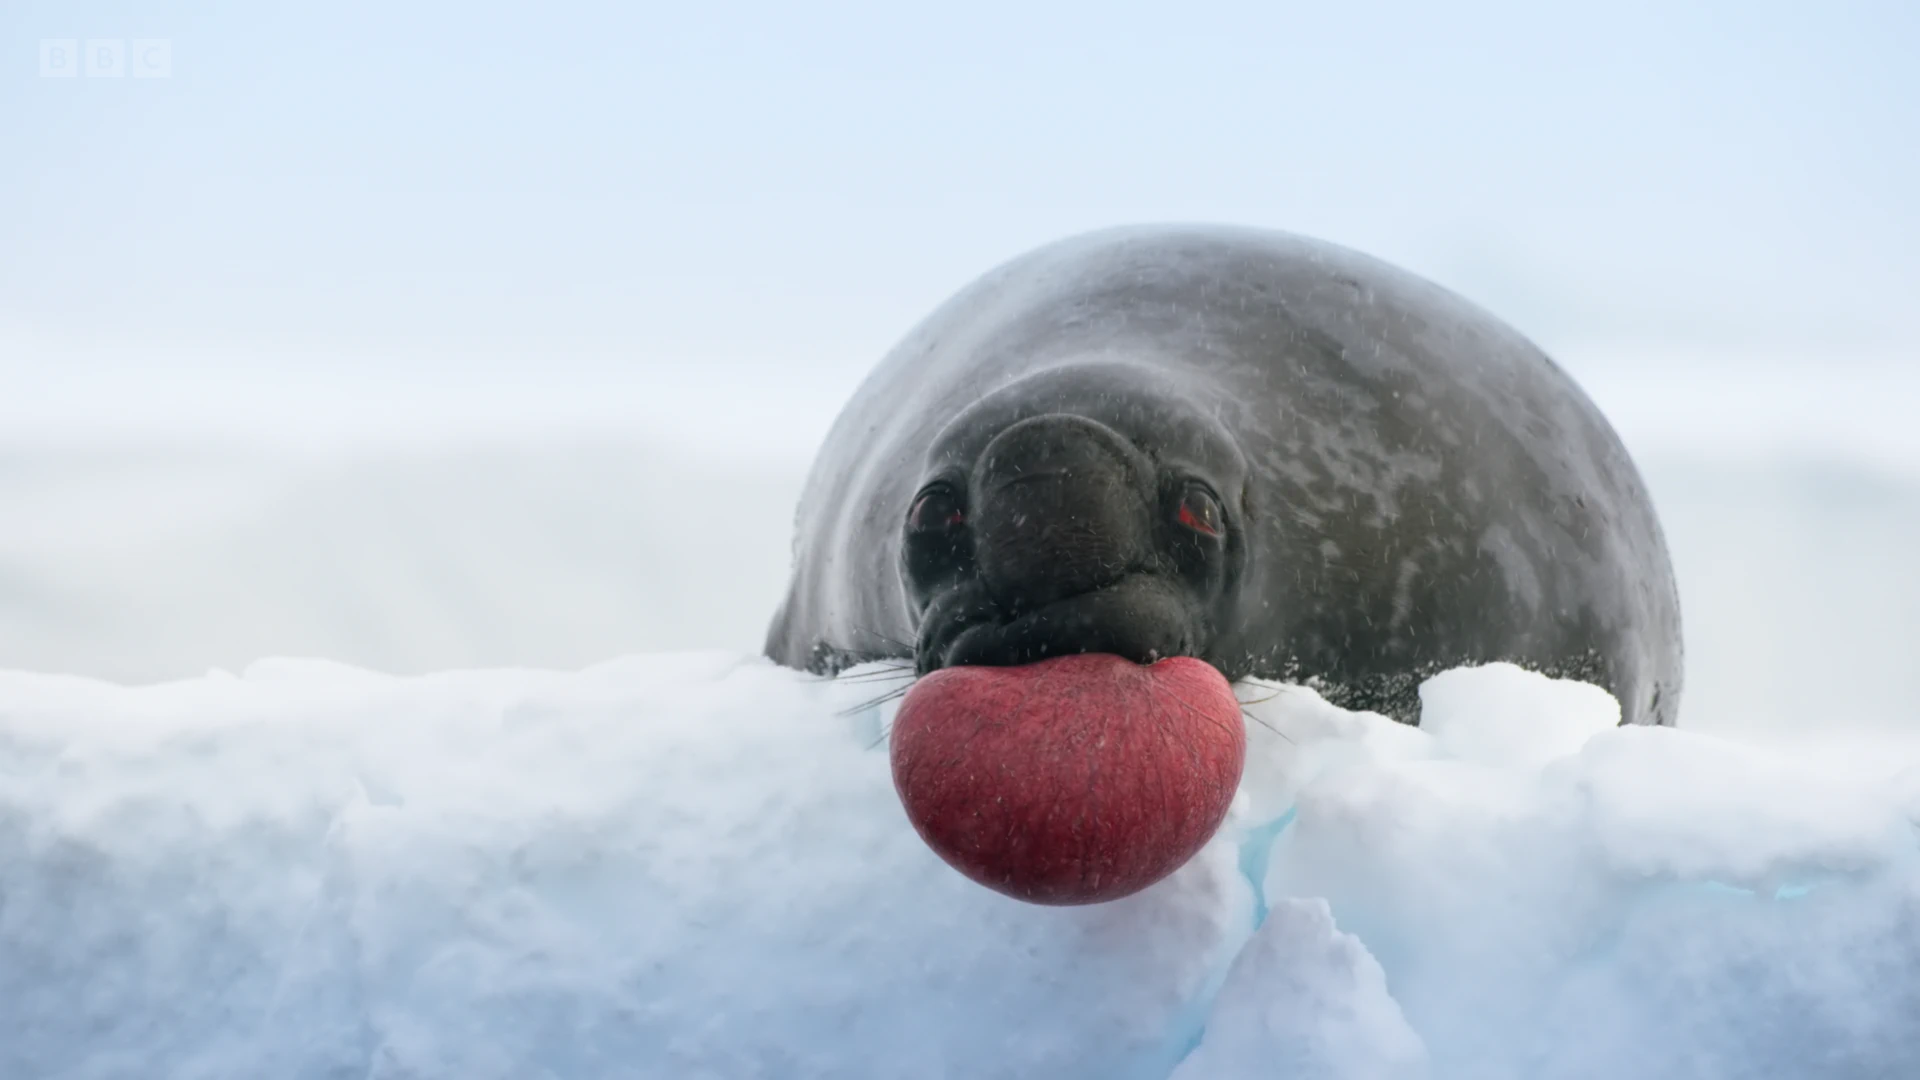 Hooded seal (Cystophora cristata) as shown in Frozen Planet II - Frozen Worlds